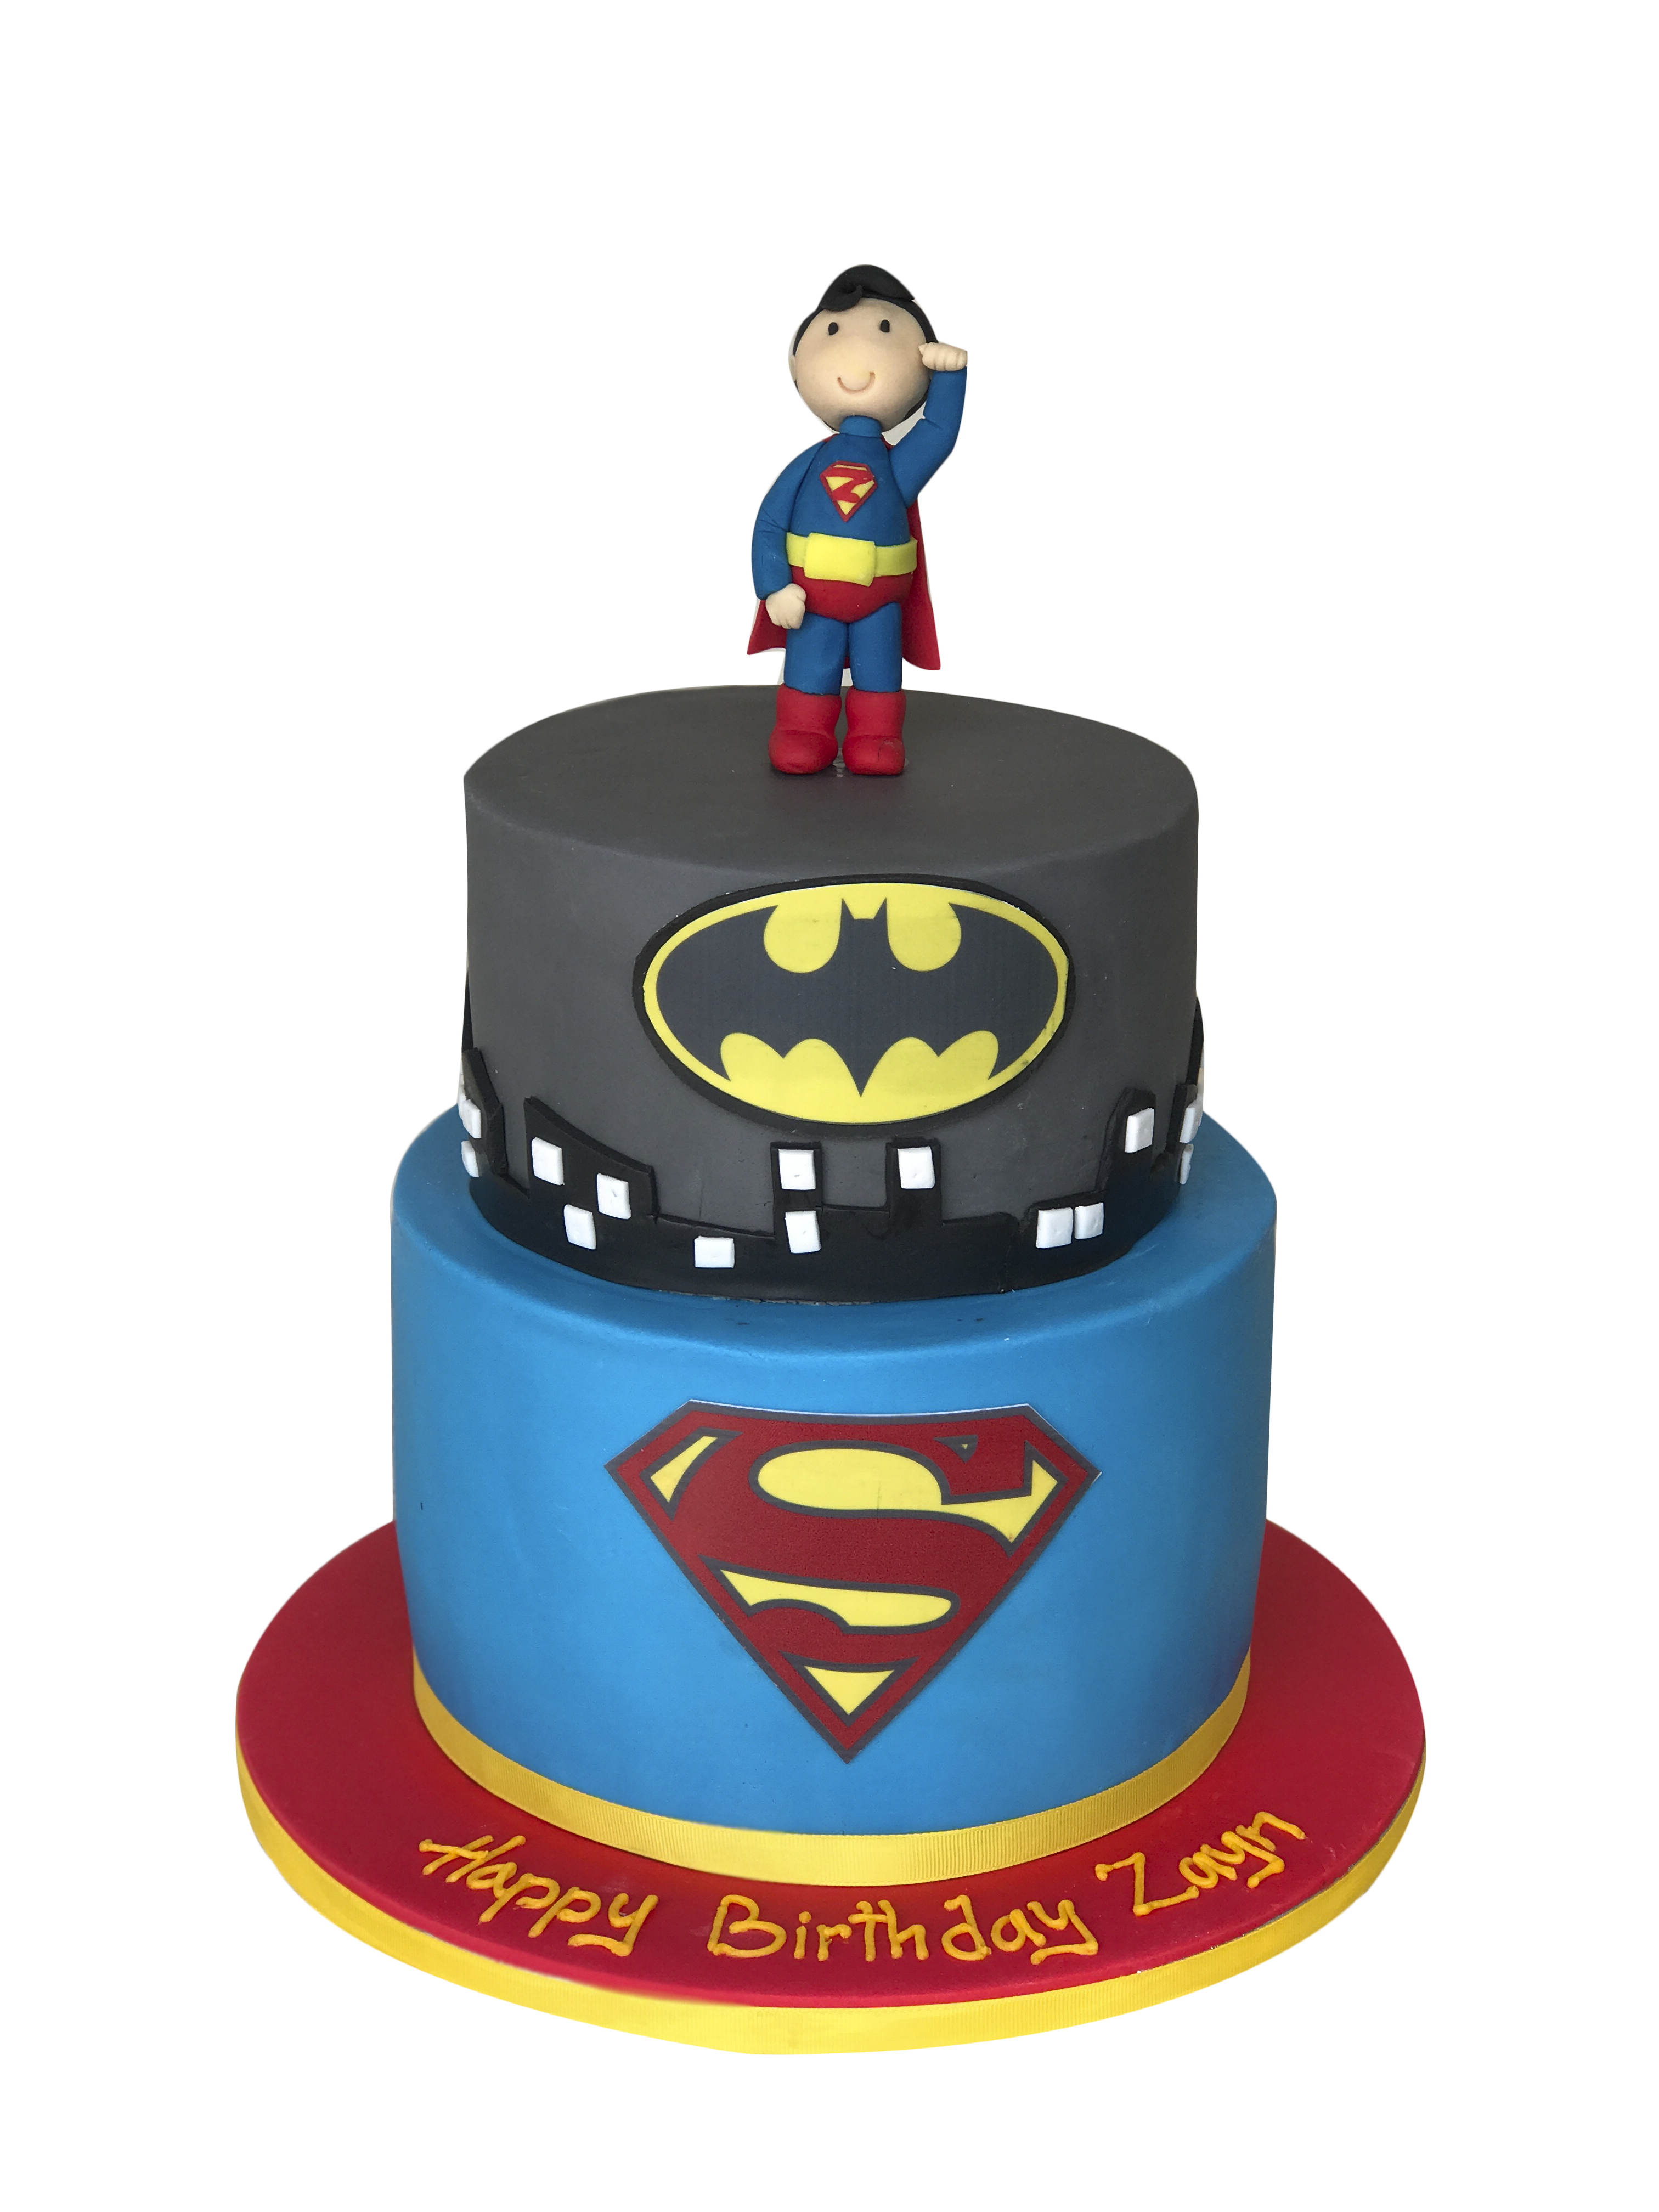 Superhero Cake Decoration, Superhero Birthday Cake Decoration, Superhero  Birthday Cake Decoration Ornament, Party Cake Decoration Supplies for  Children Birthday : Buy Online at Best Price in KSA - Souq is now Amazon.sa: